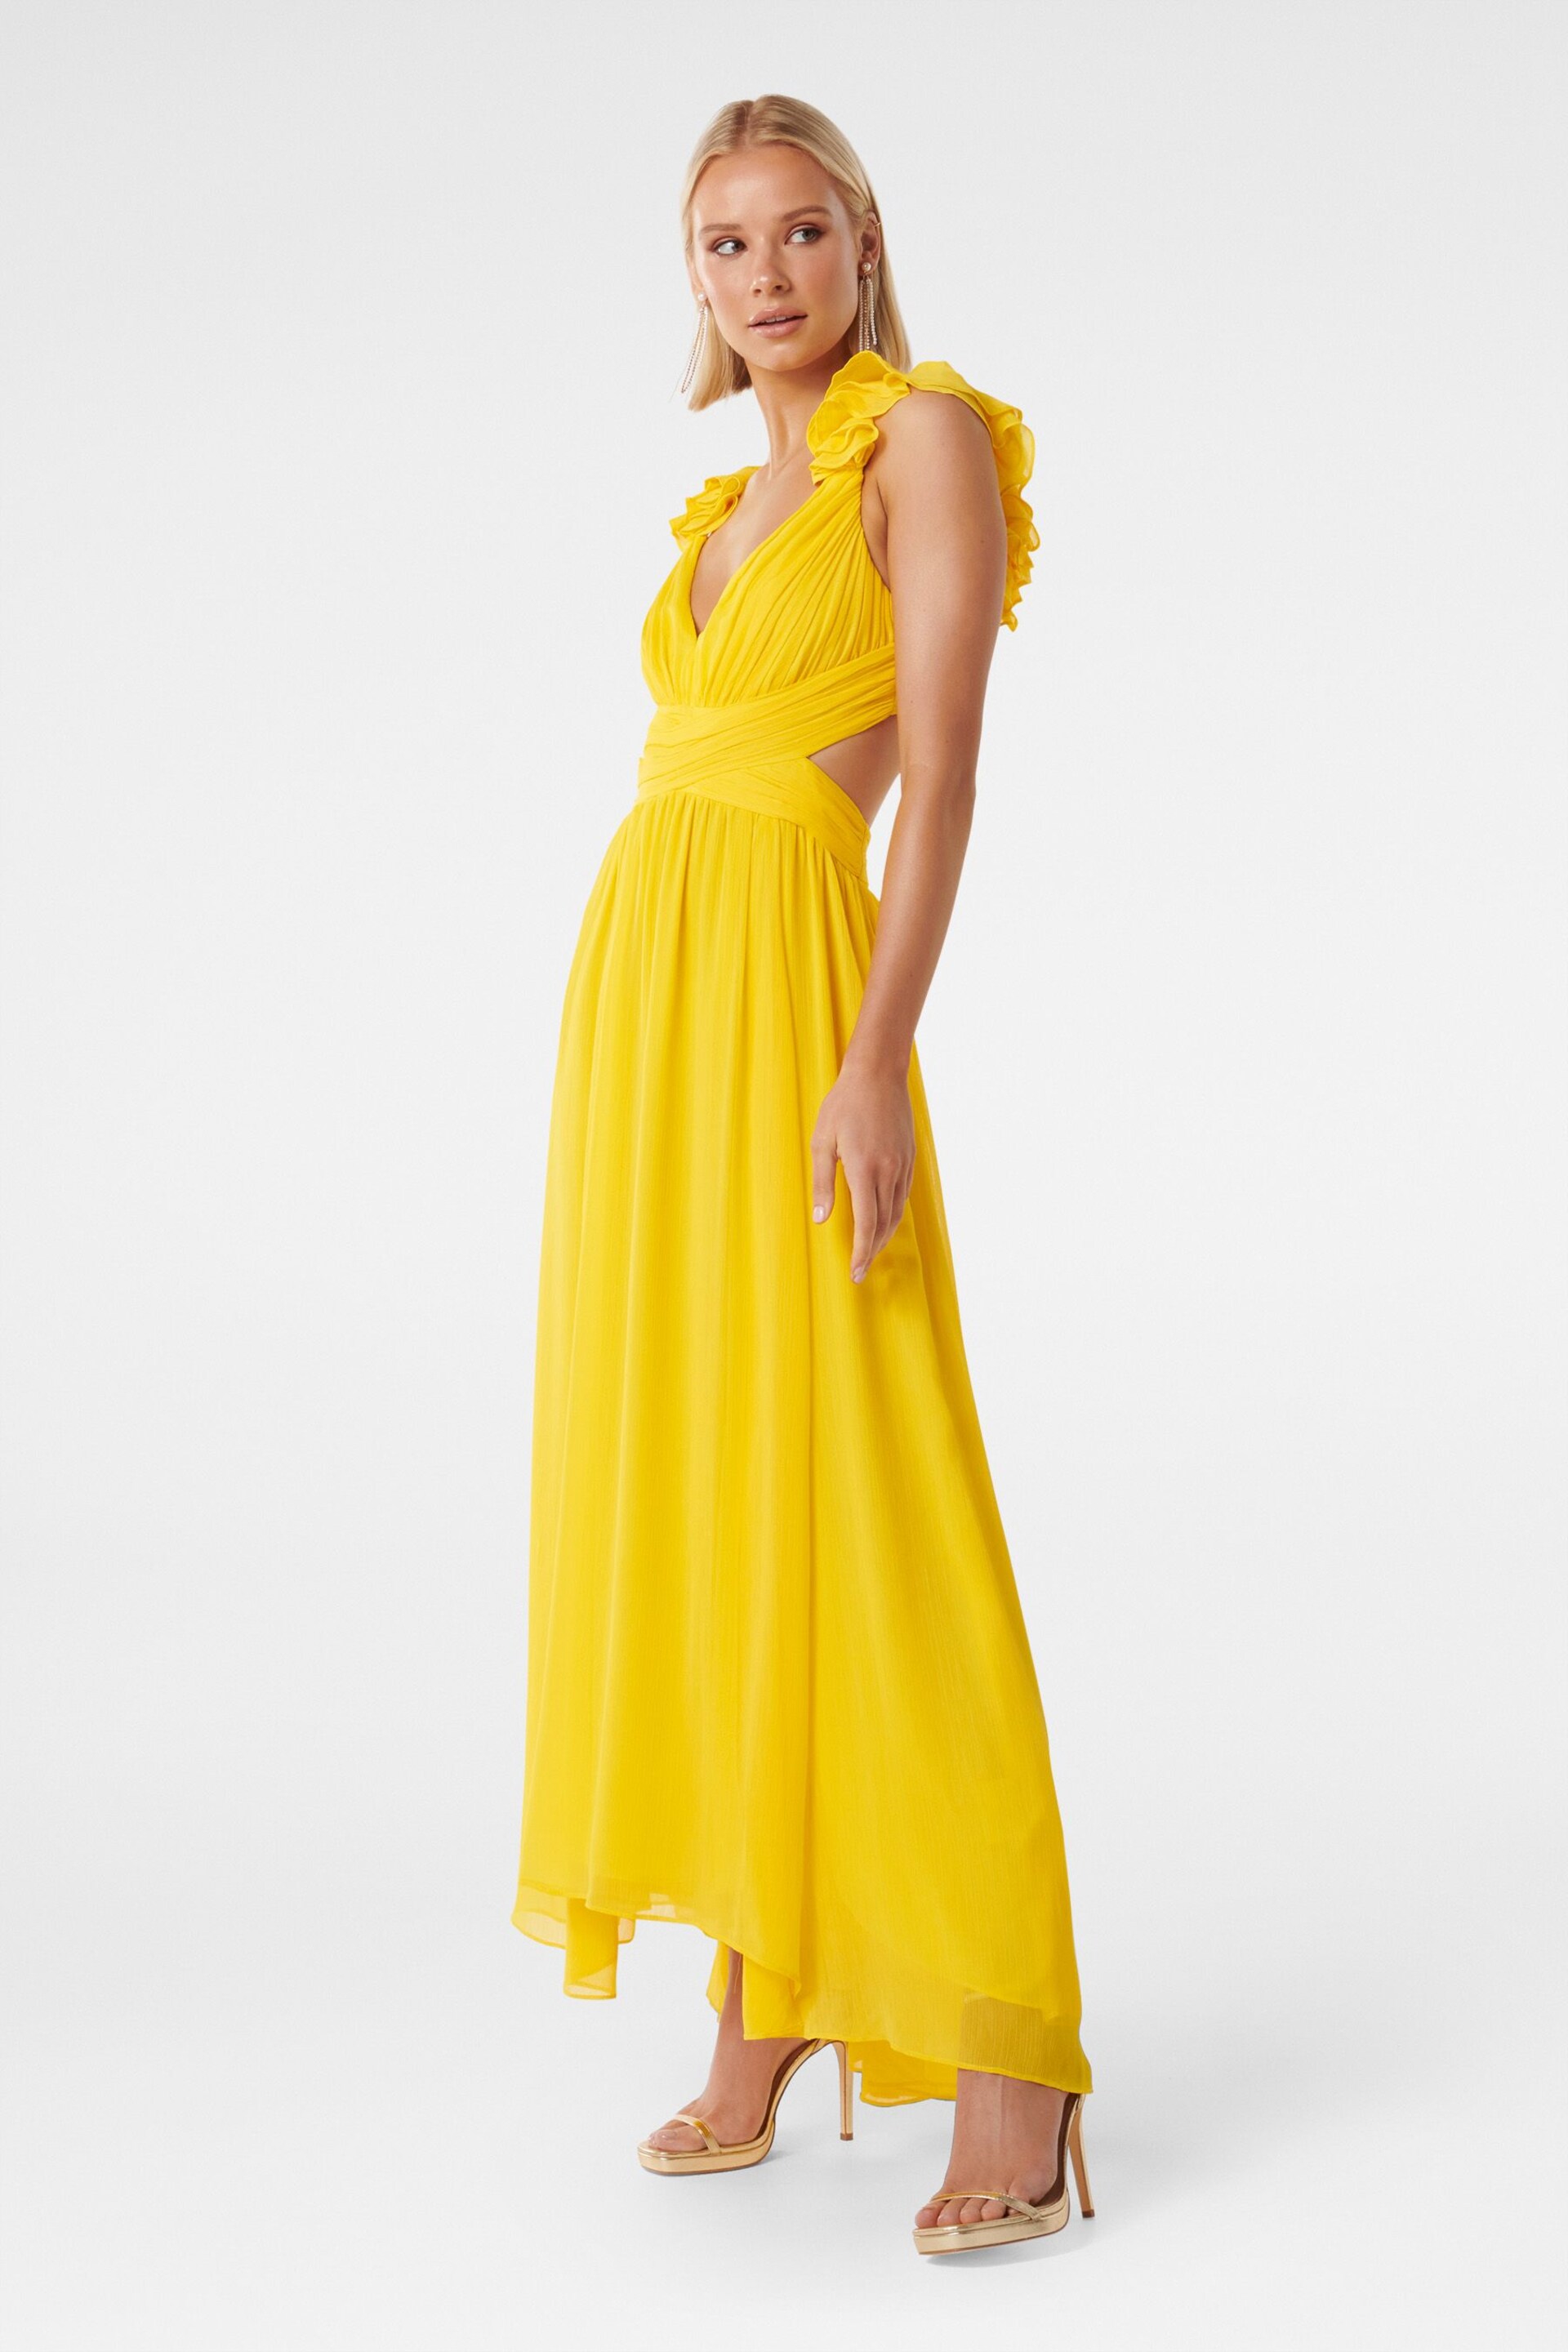 Forever New Yellow Selena Ruffle Shoulder Maxi Dress - Image 3 of 4